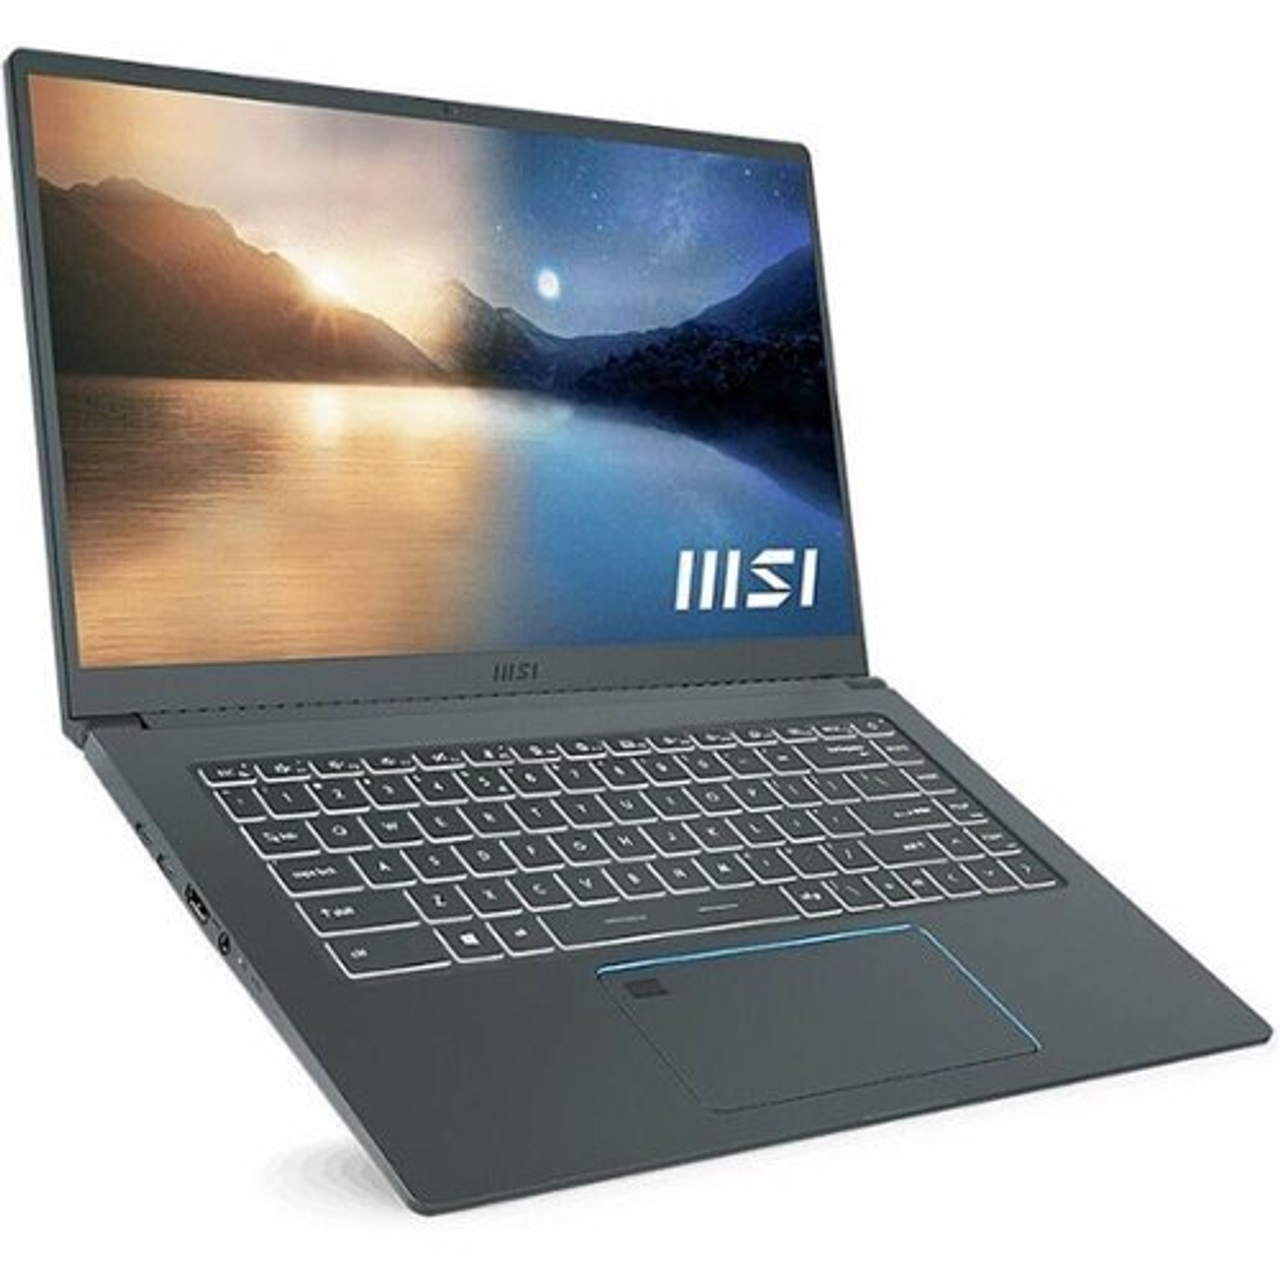 MSI - Prestige 15 15.6" Laptop - Intel Core i7 with 16GB Memory - 512 GB SSD - Carbon Gray, Gray